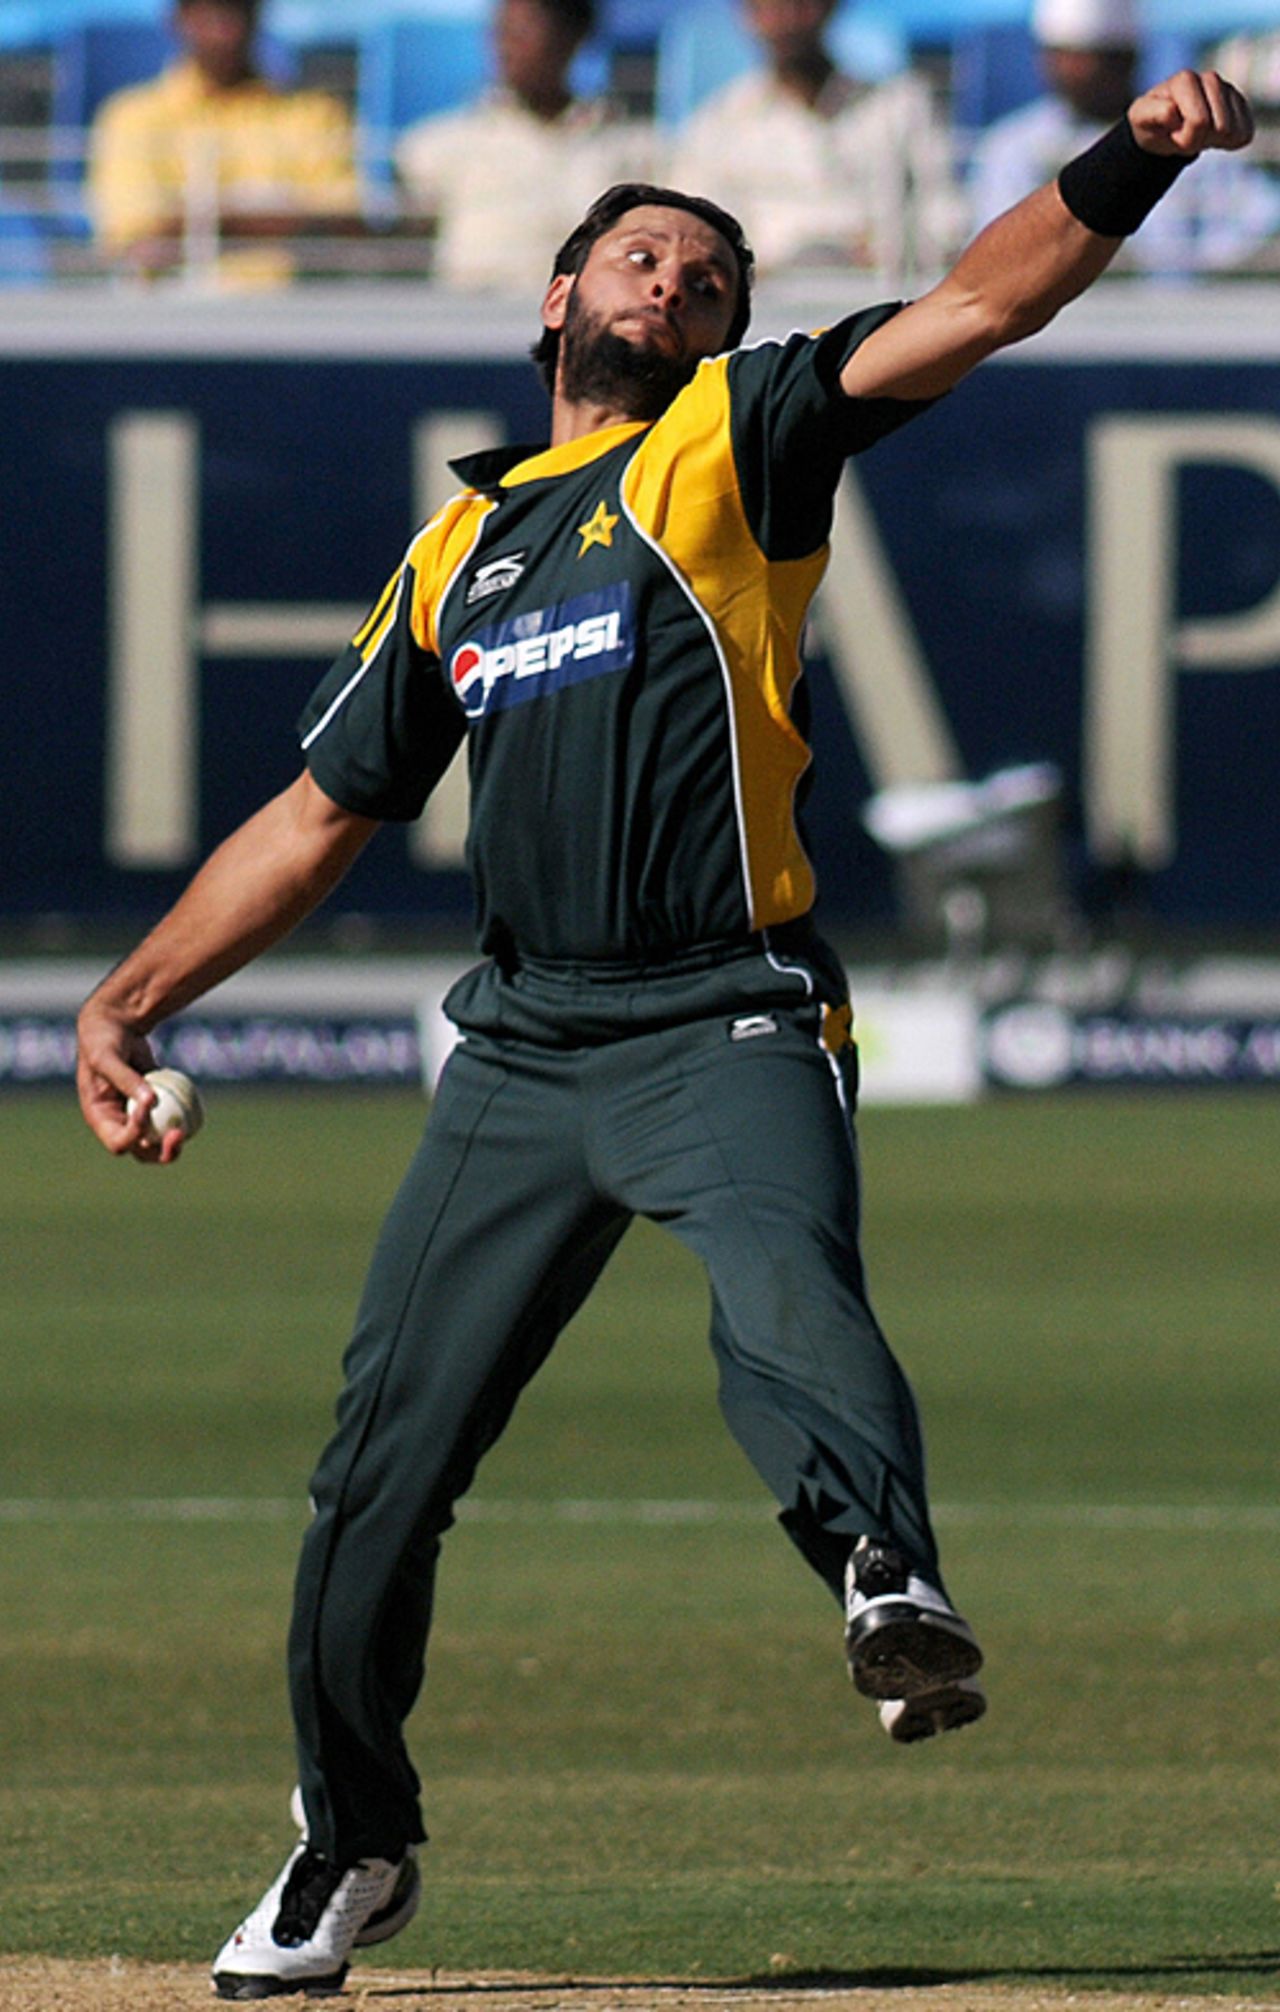 Shahid Afridi ended with 6 for 38, Pakistan v Australia, 1st ODI, Dubai, April 22, 2009